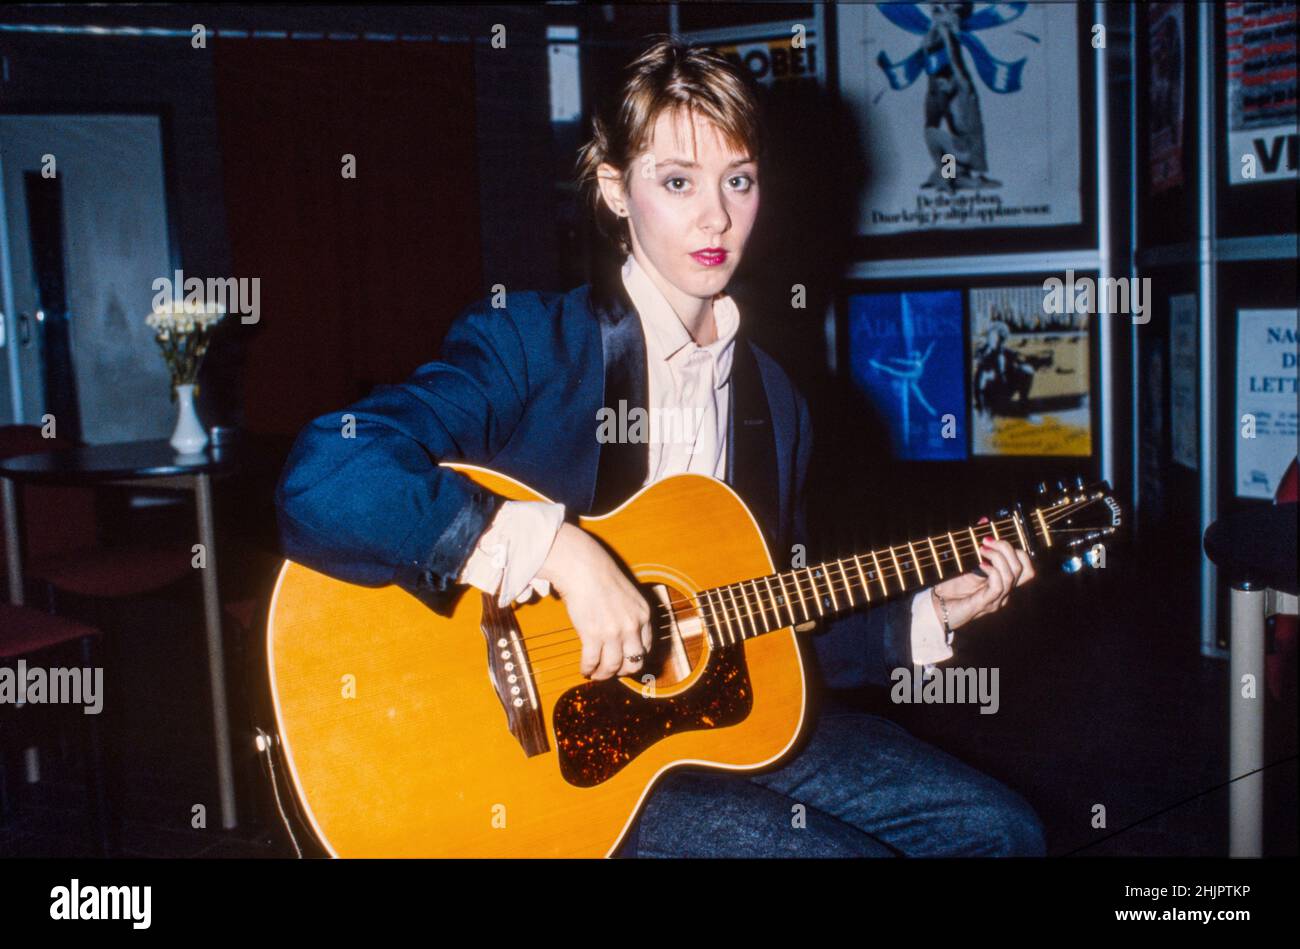 HILVERSUM, THE NETHERLANDS - NOV 06, 1985: American singer-songwriter Suzanne Vega. Stock Photo